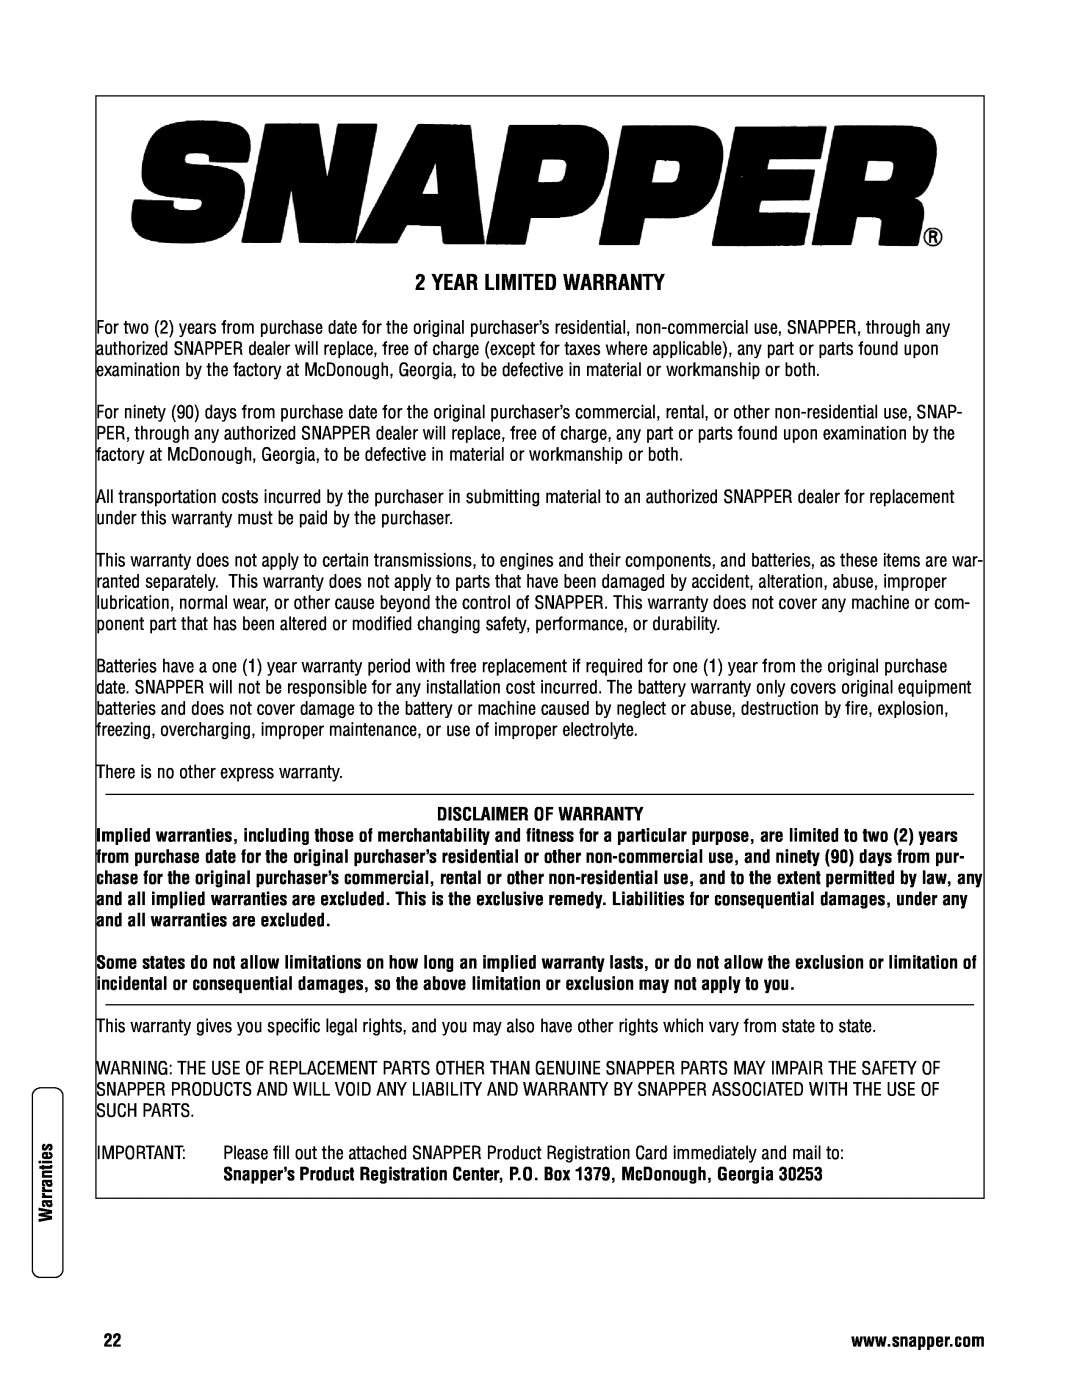 Snapper CP215520HV specifications Year Limited Warranty, Warranties, Disclaimer Of Warranty 